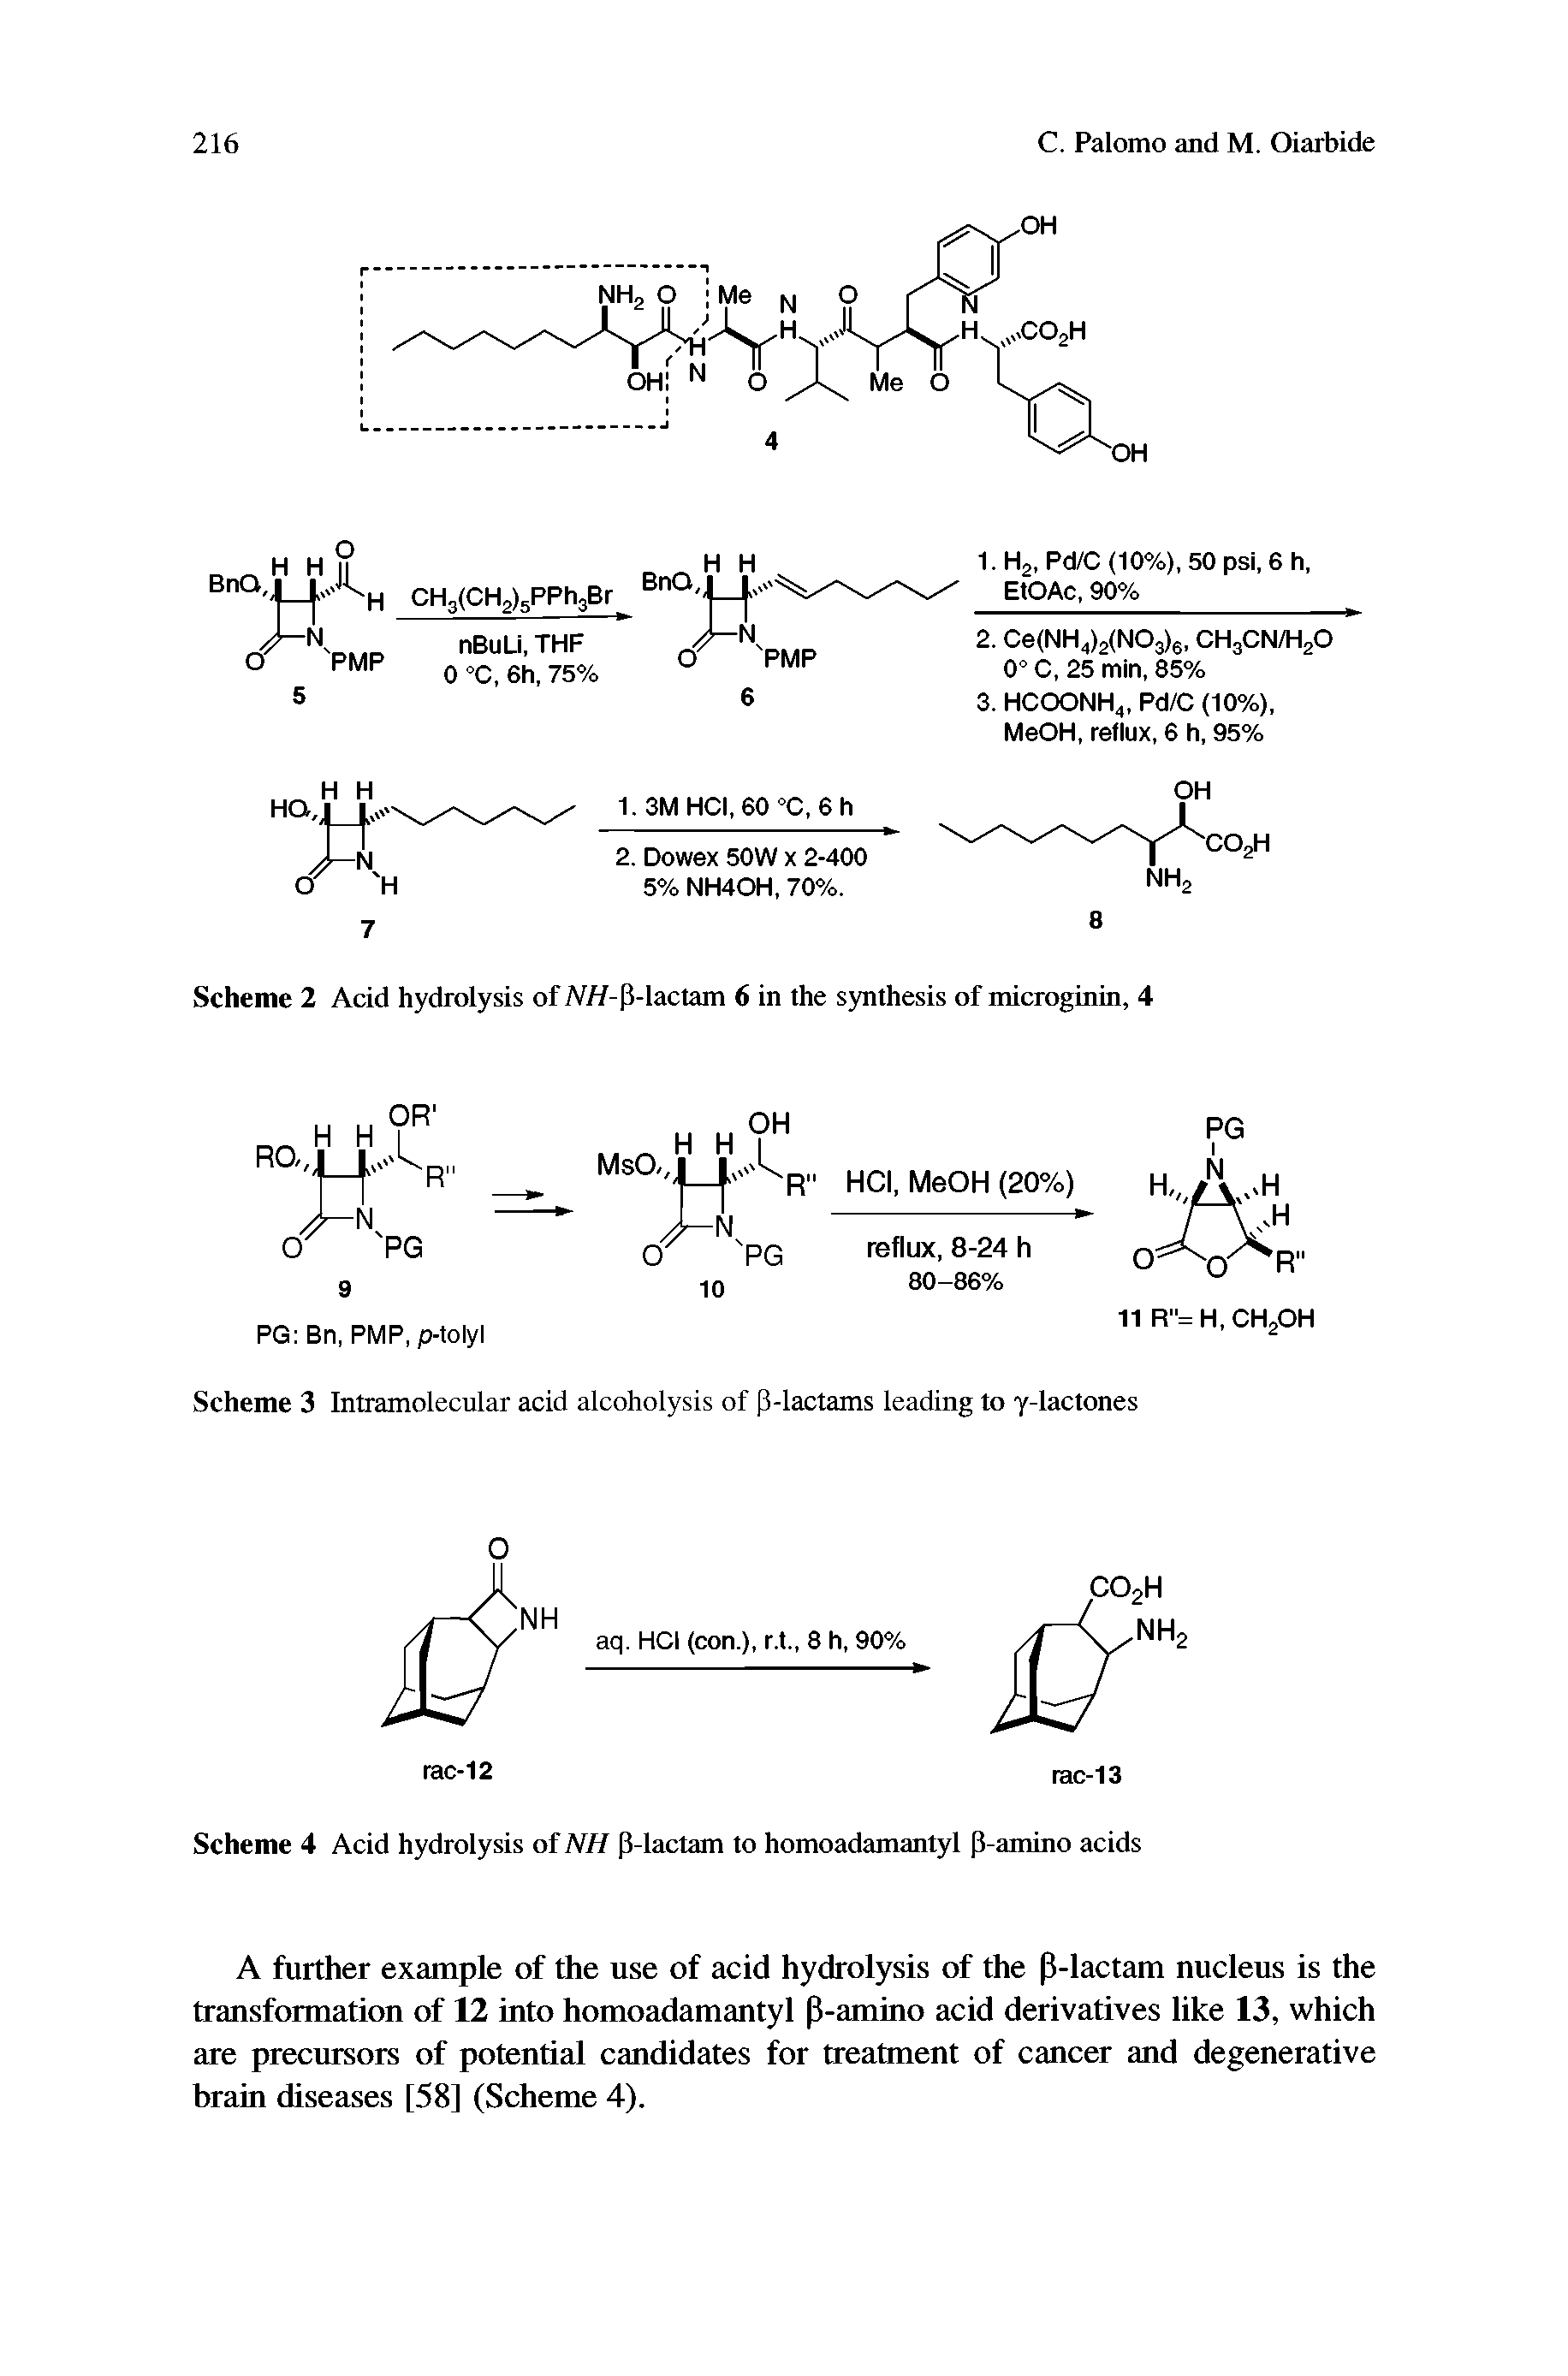 Scheme 4 Acid hydrolysis of NH P-lactam to homoadamantyl P-amino acids...